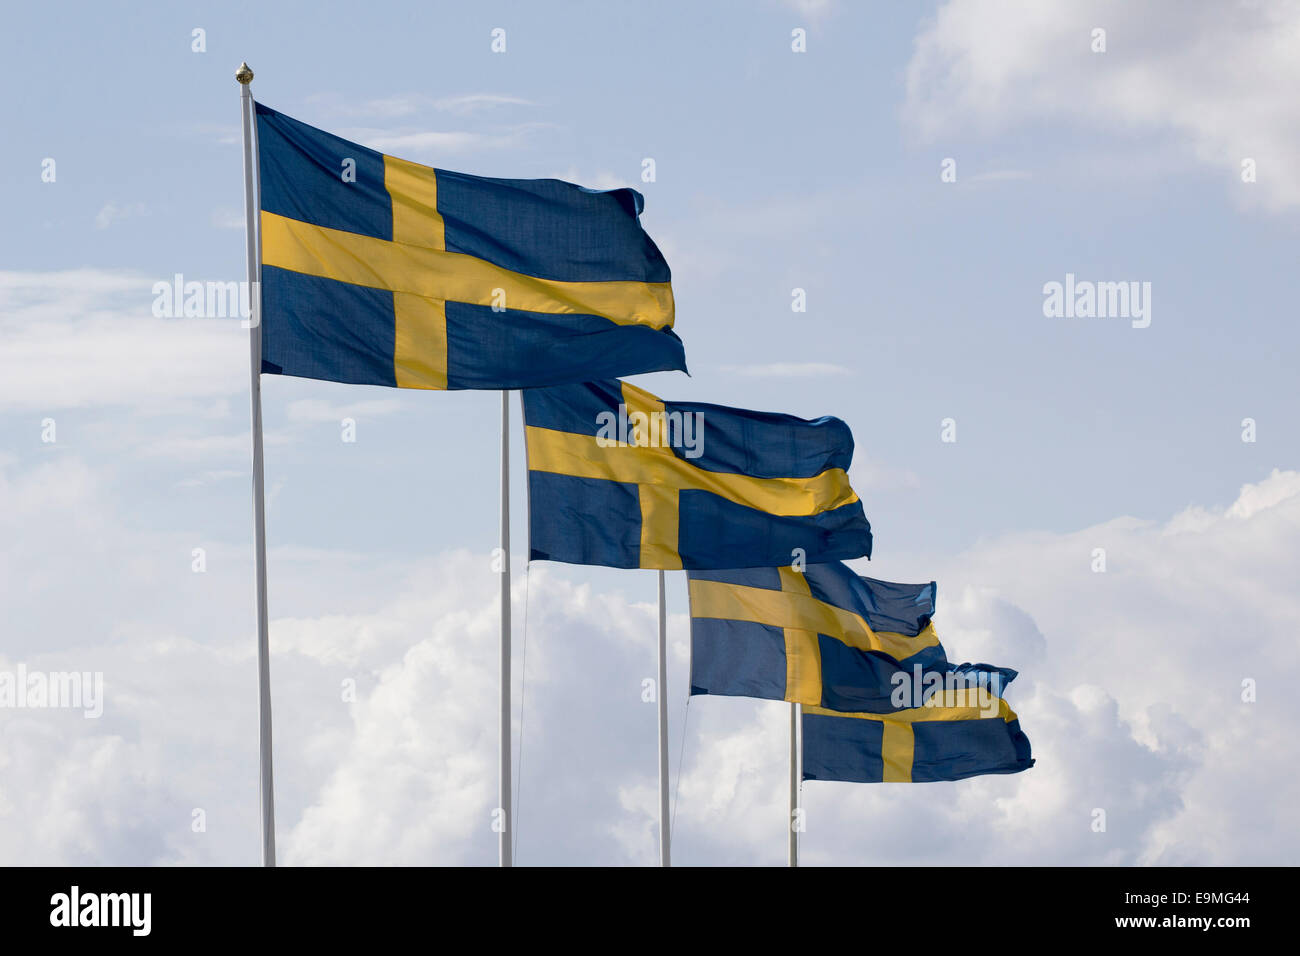 Row of Swedish flag poles against cloudy sky Stock Photo